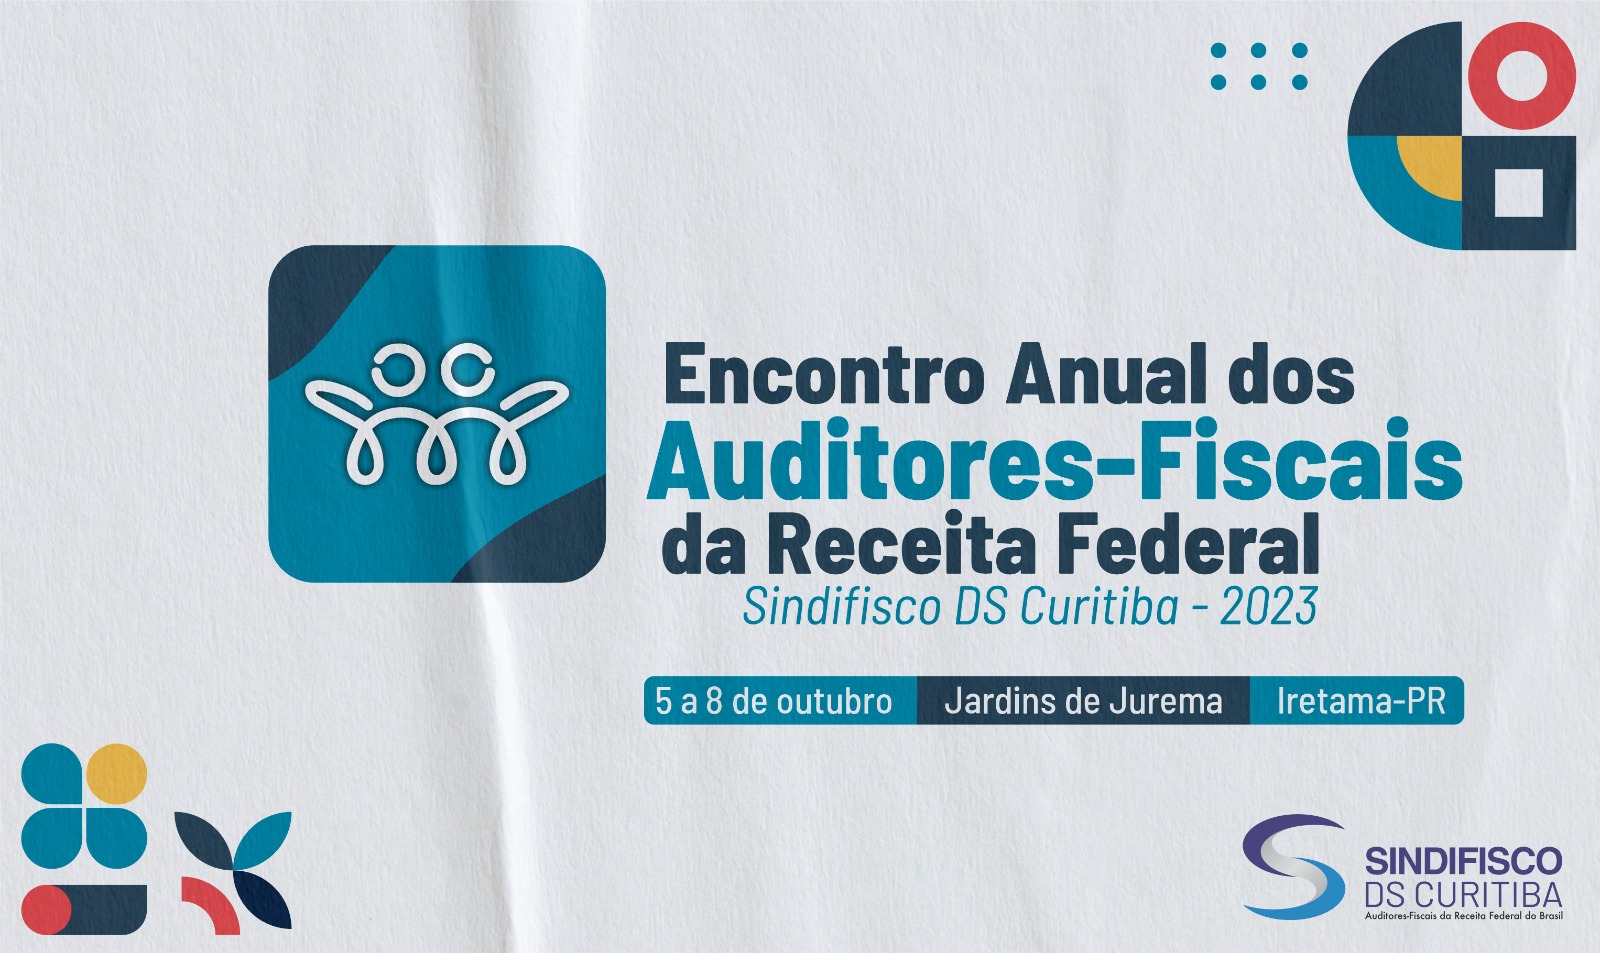 DS Curitiba inicia preparativos para o Encontro Anual dos Auditores-Fiscais da capital paranaense